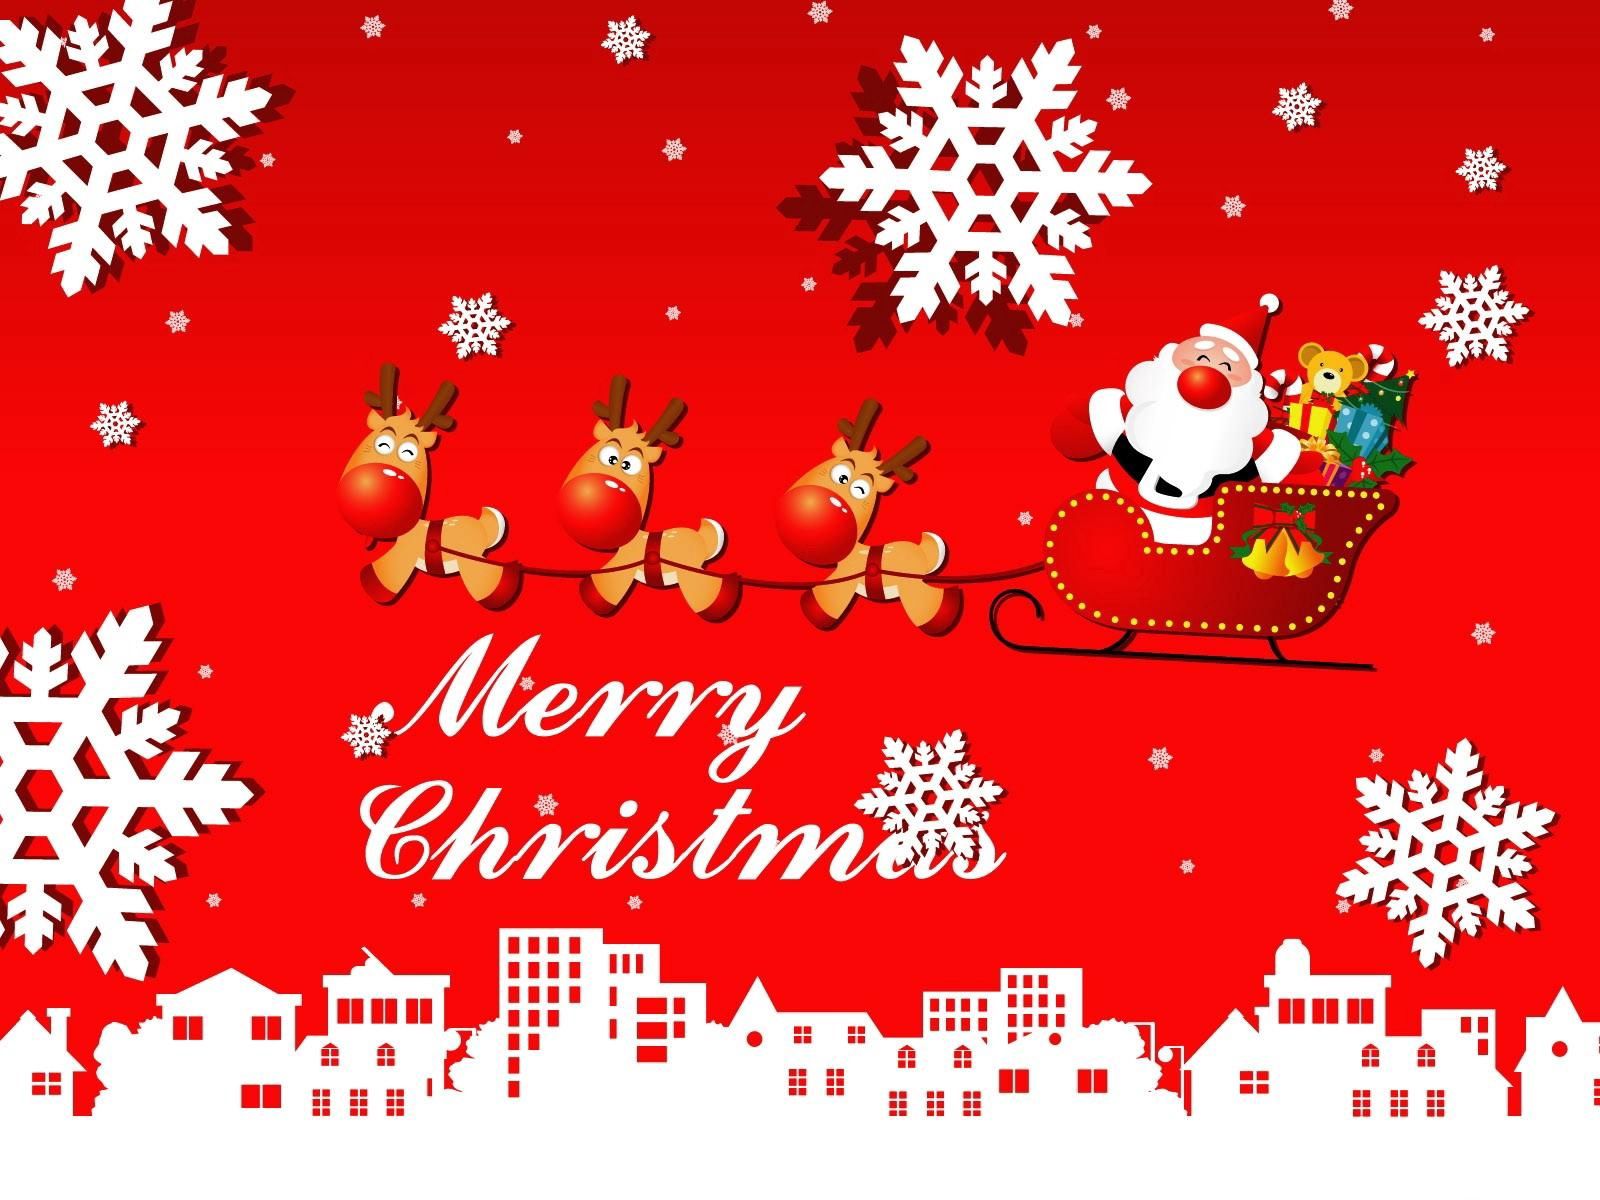 holidays, santa claus, deers, snowflakes, city, christmas, sleigh, sledge, presents, gifts